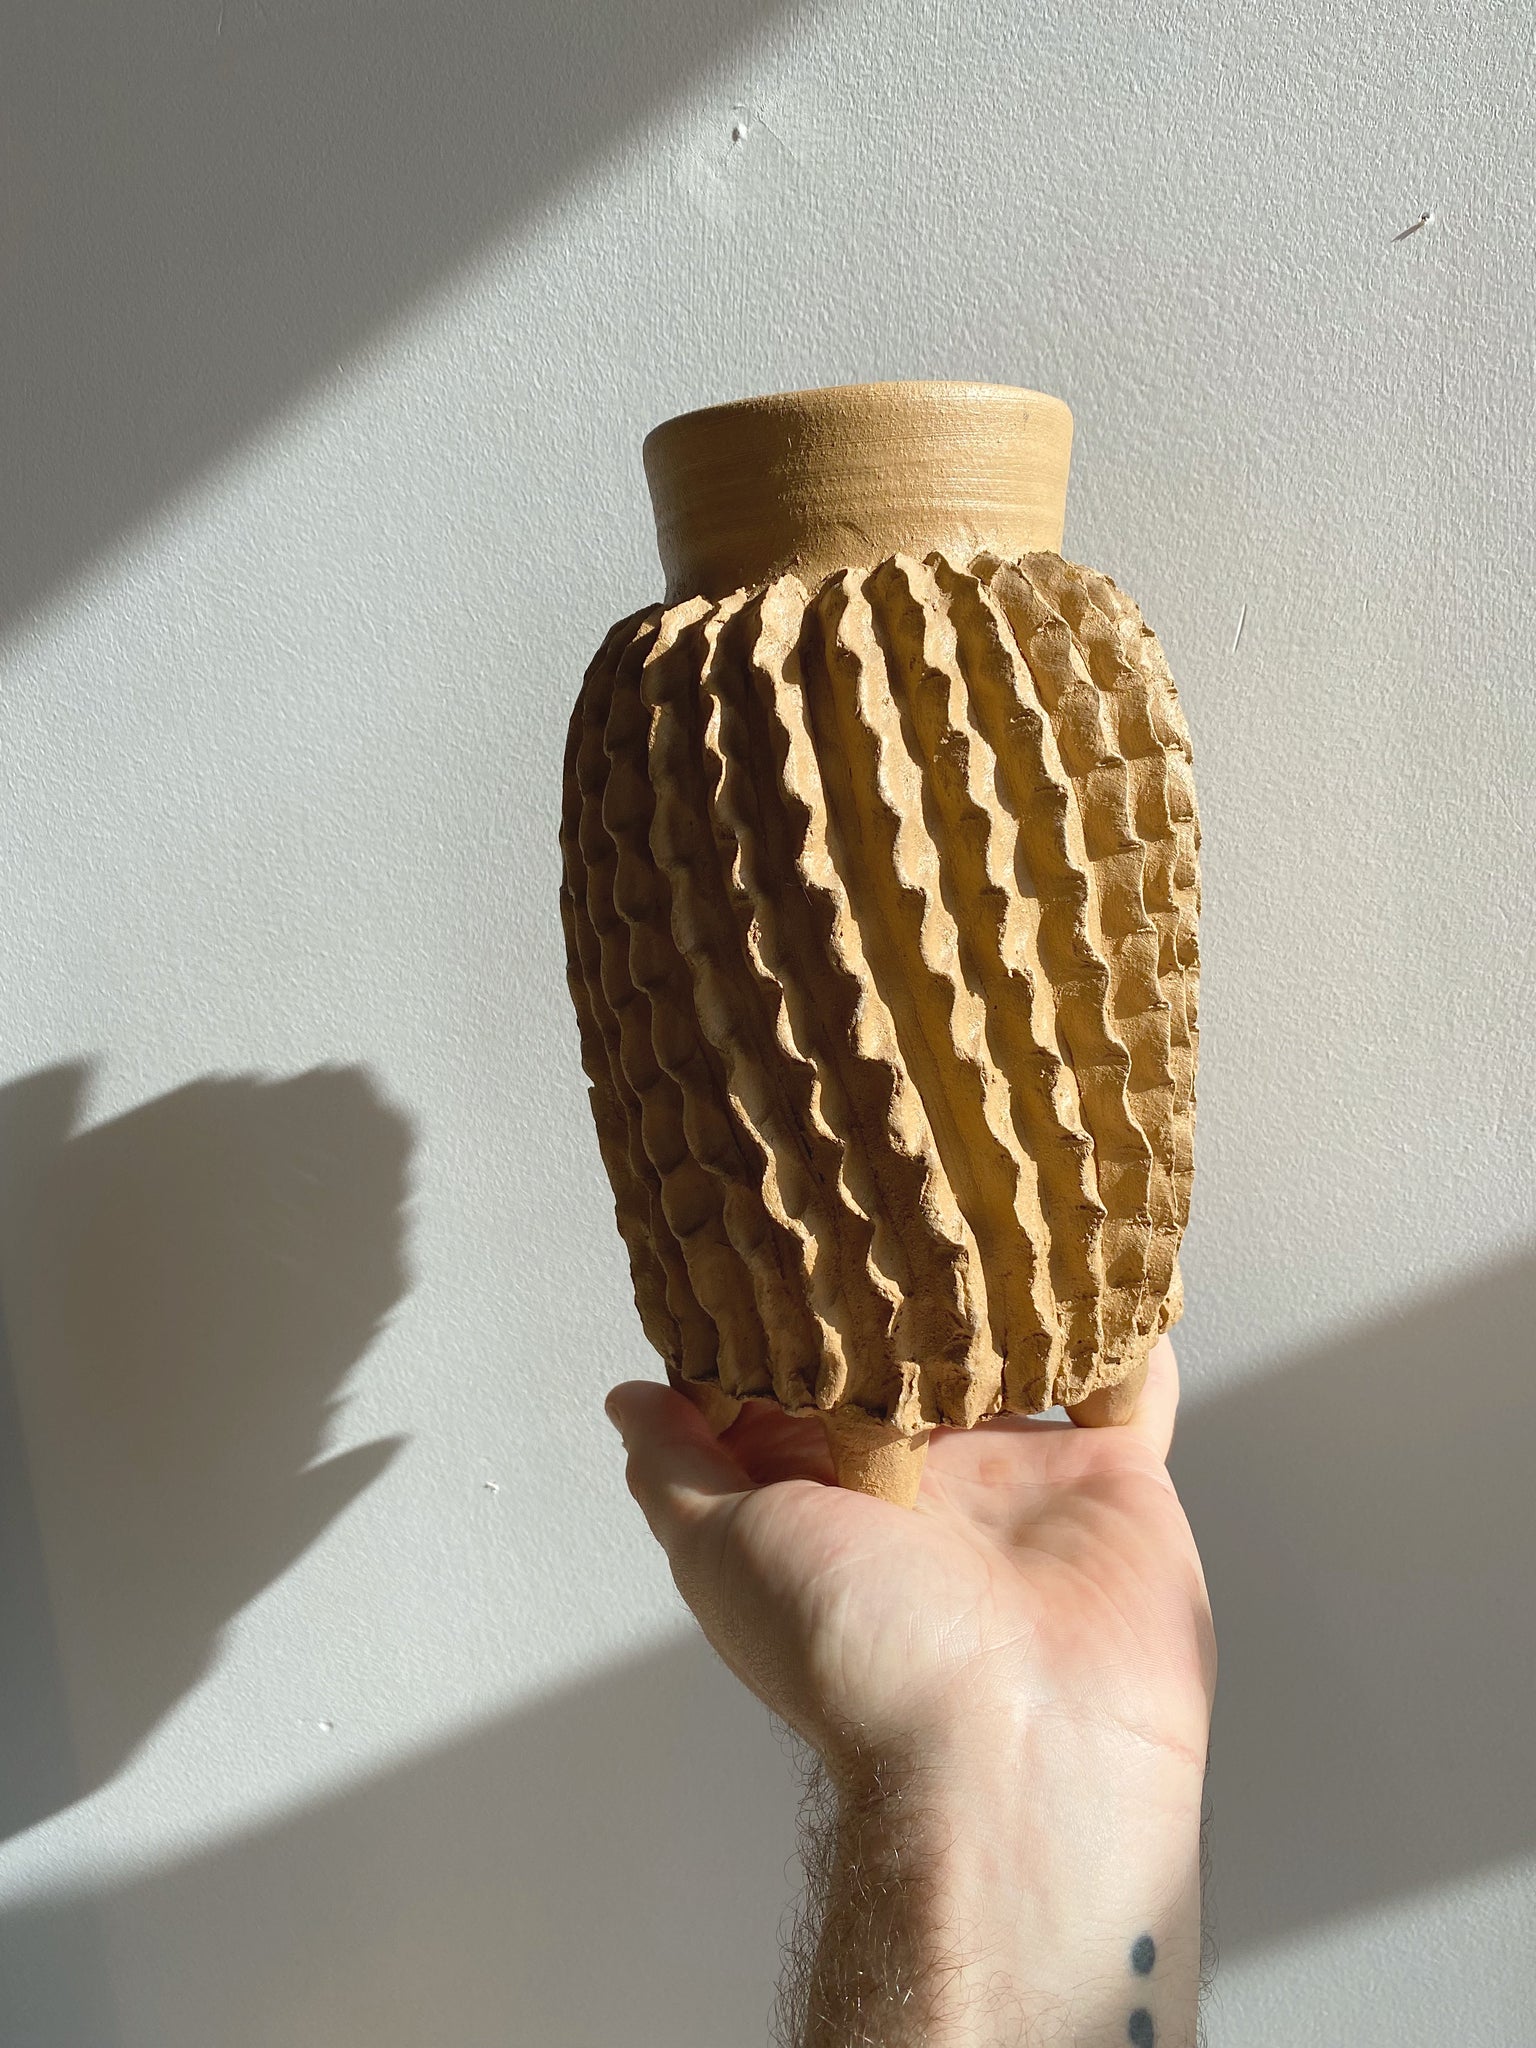 Handmade Barrel Cactus Clay Planter/Sculpture